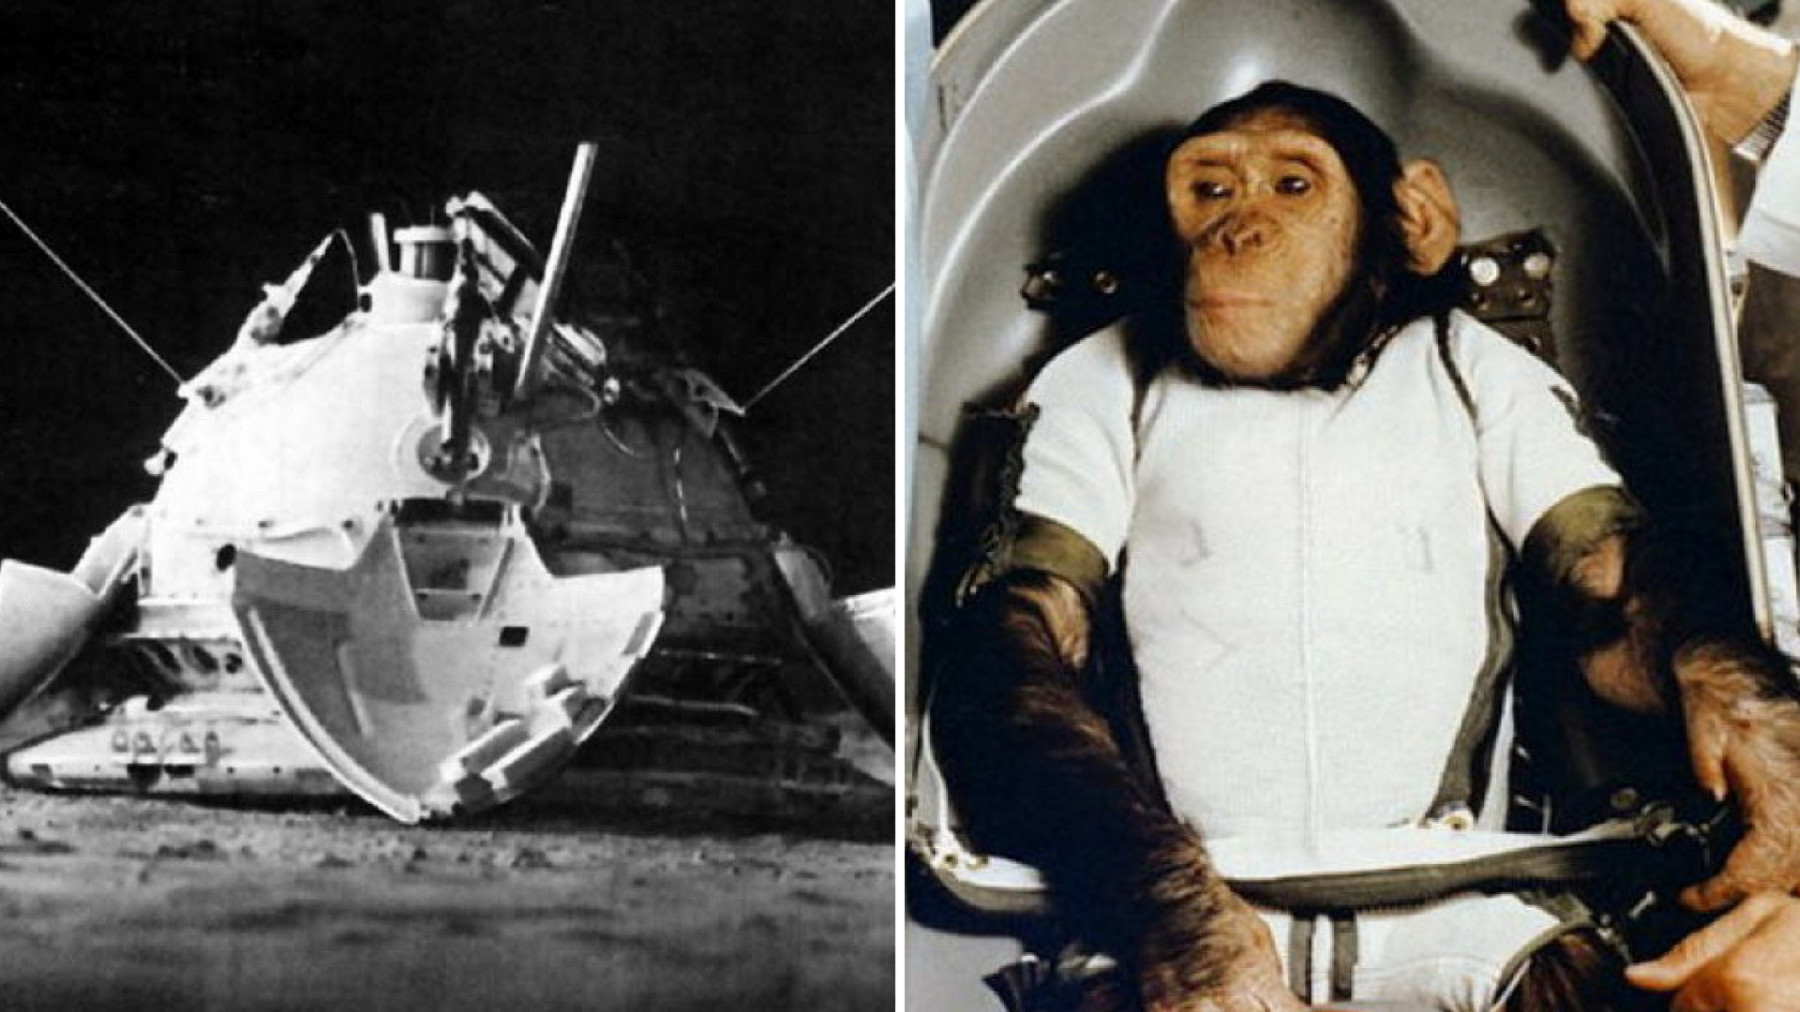 Первая обезьяна полетевшая в космос. Обезьяны в космосе 1959 Эйбл и Бейкер. Шимпанзе Хэм космонавт.